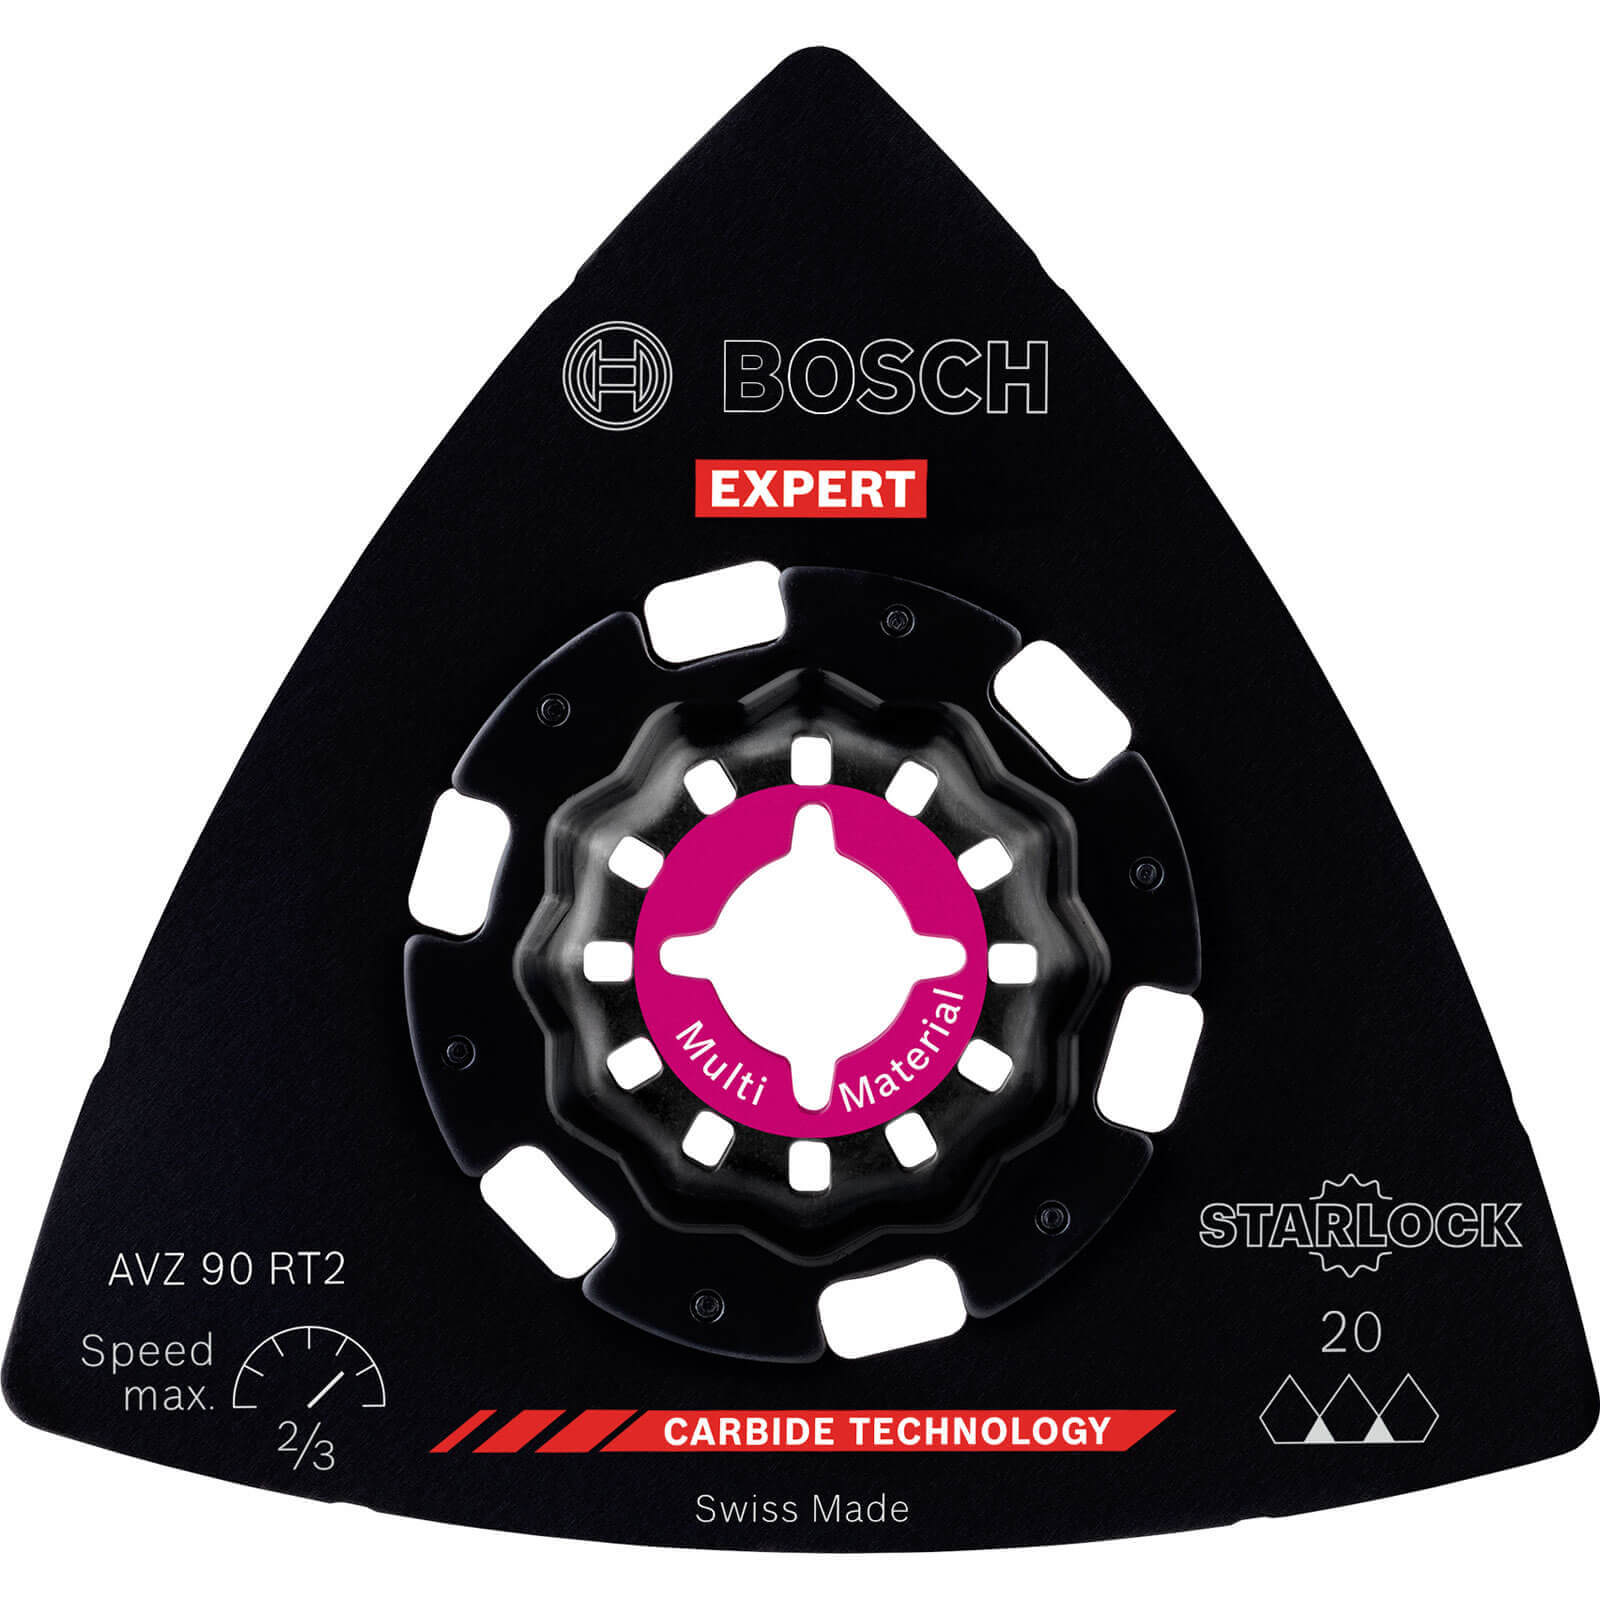 Photo of Bosch Expert Avz 90 Rt Starlock Oscillating Multi Tool Sanding Plate 90mm 20g Pack Of 1